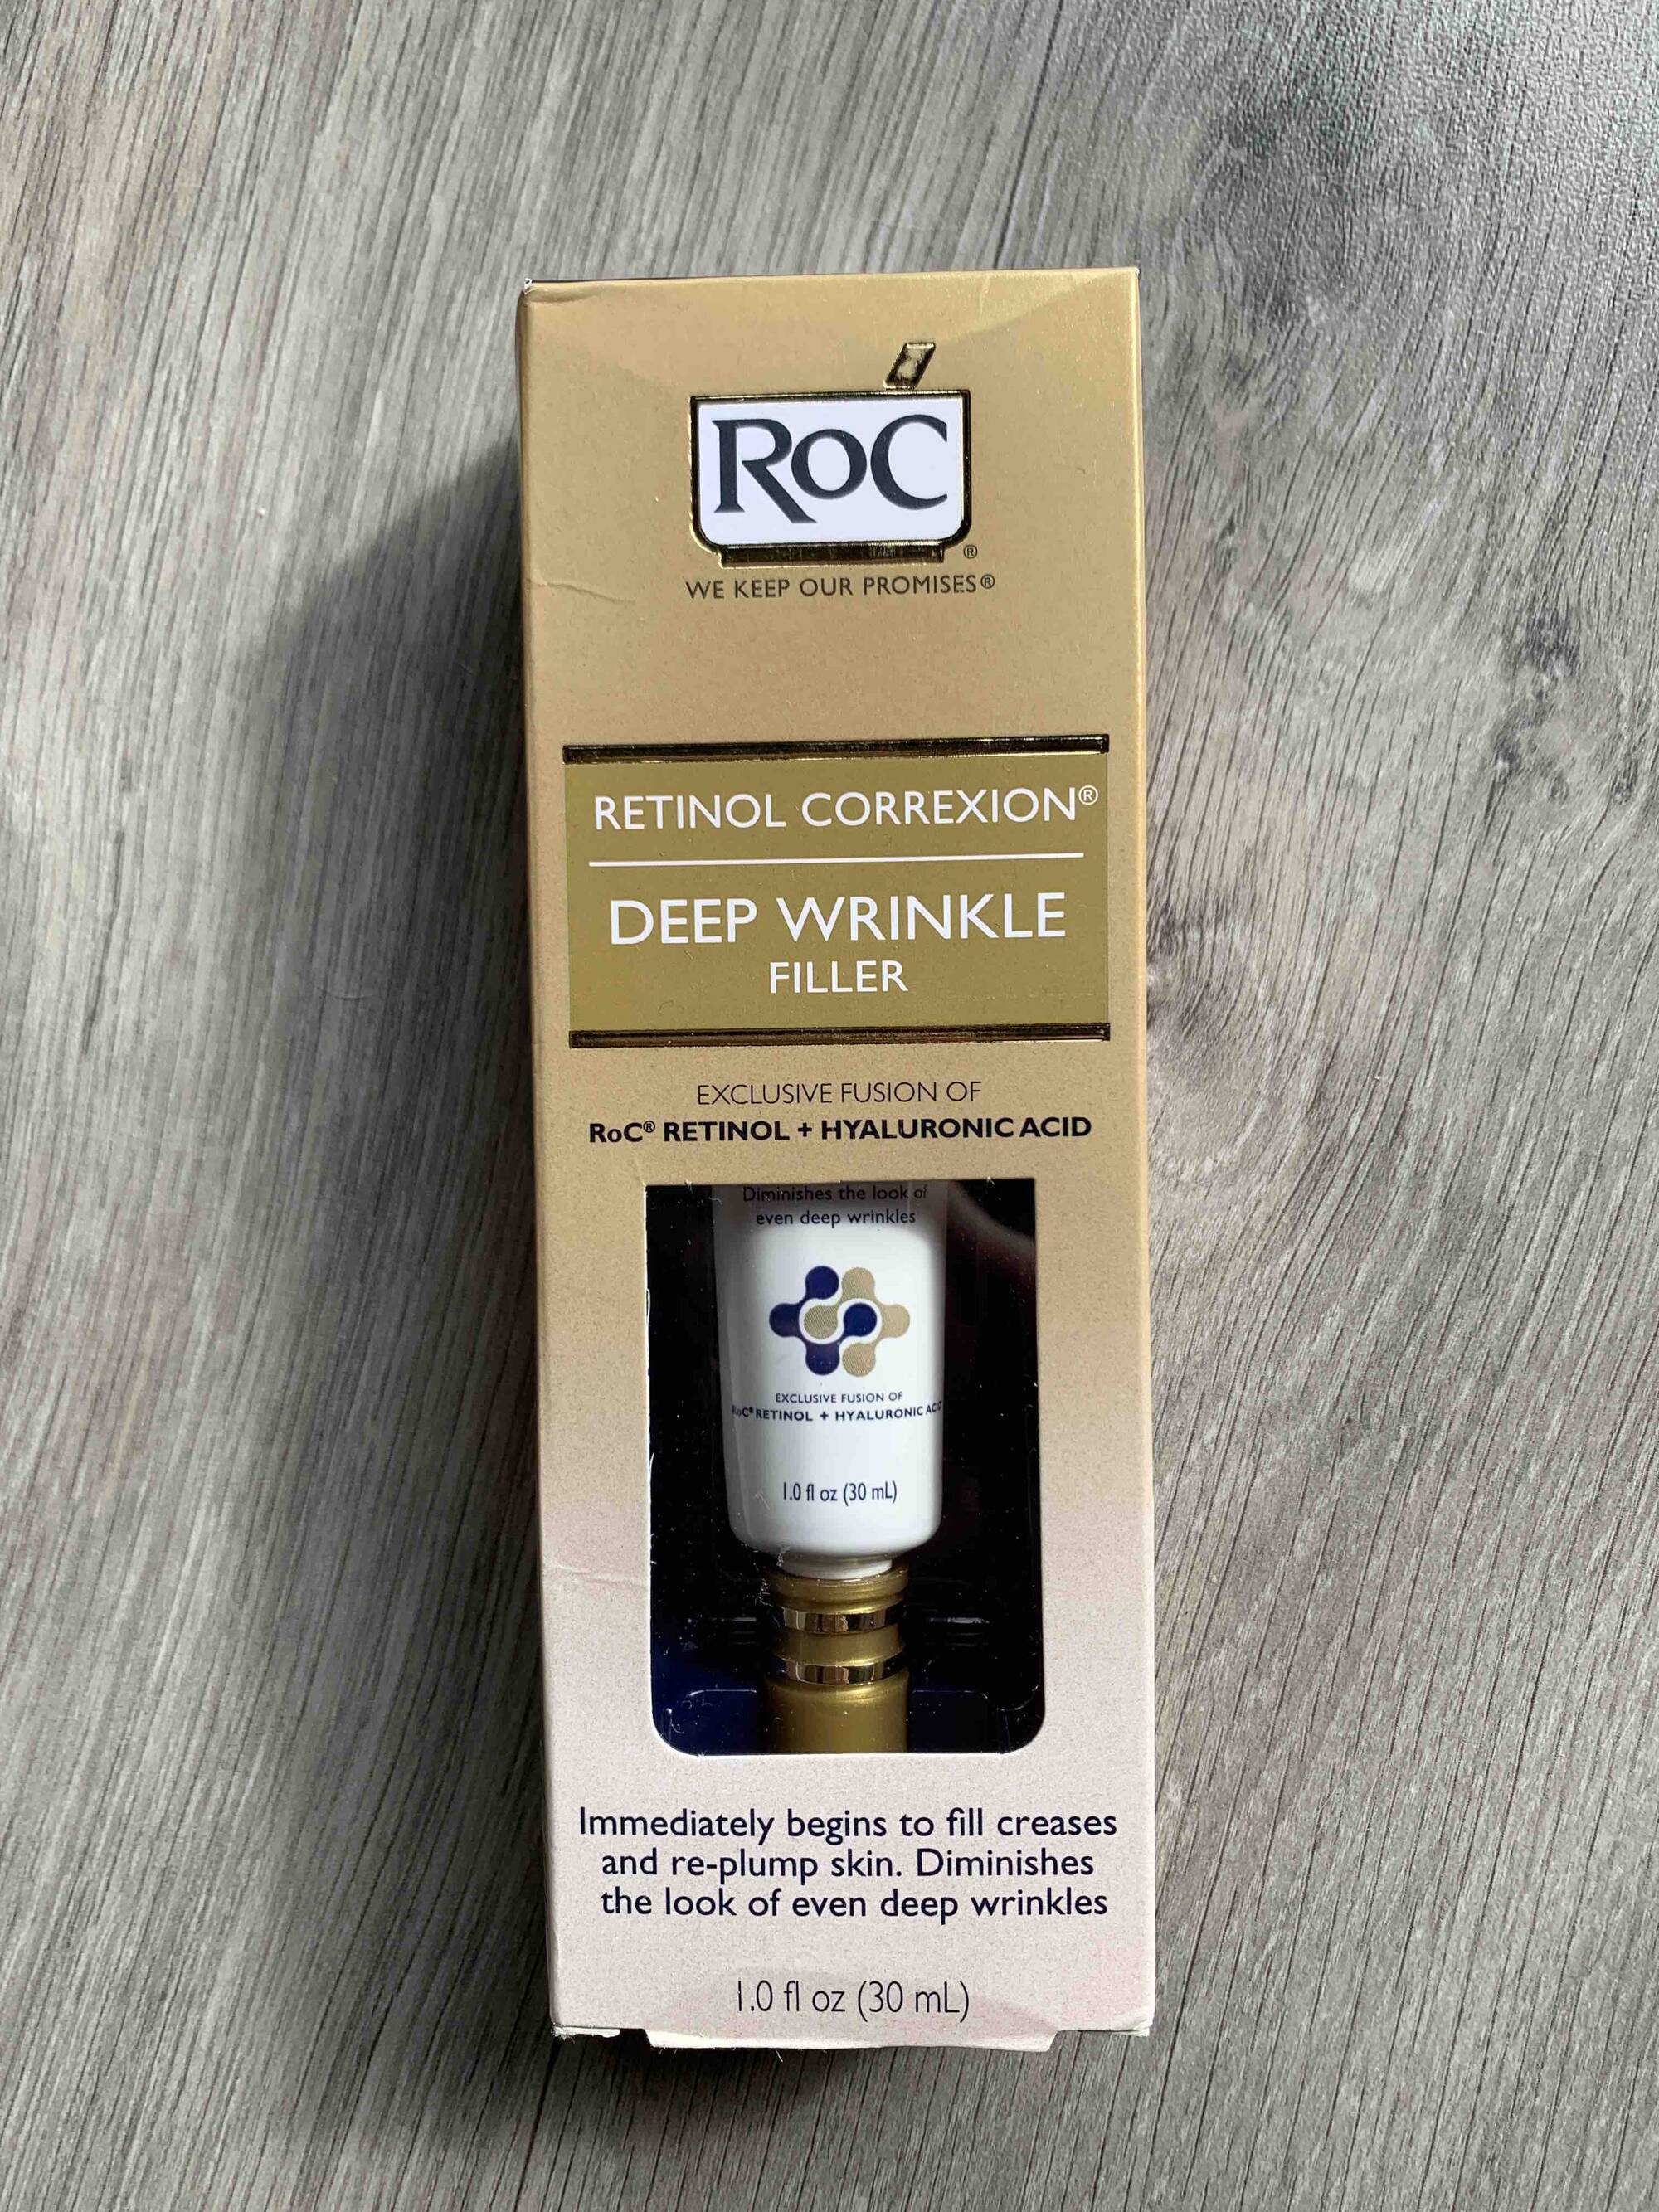 ROC - Retinol correxion - Deep wrinkle filler